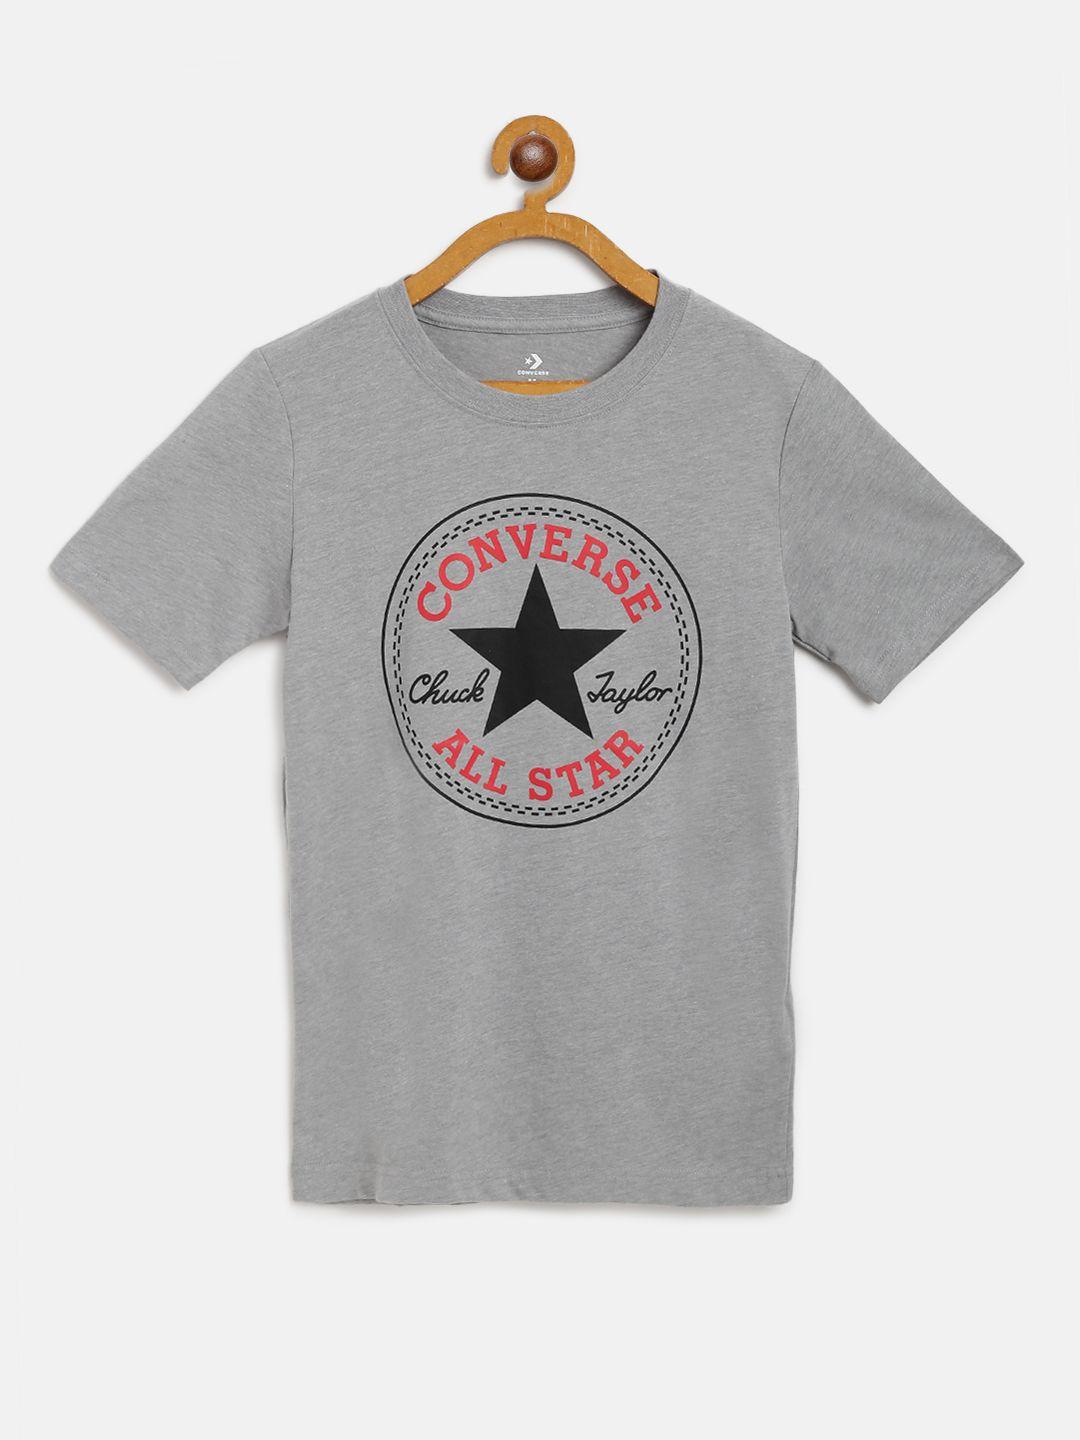 converse boys grey melange & black brand logo print round neck t-shirt